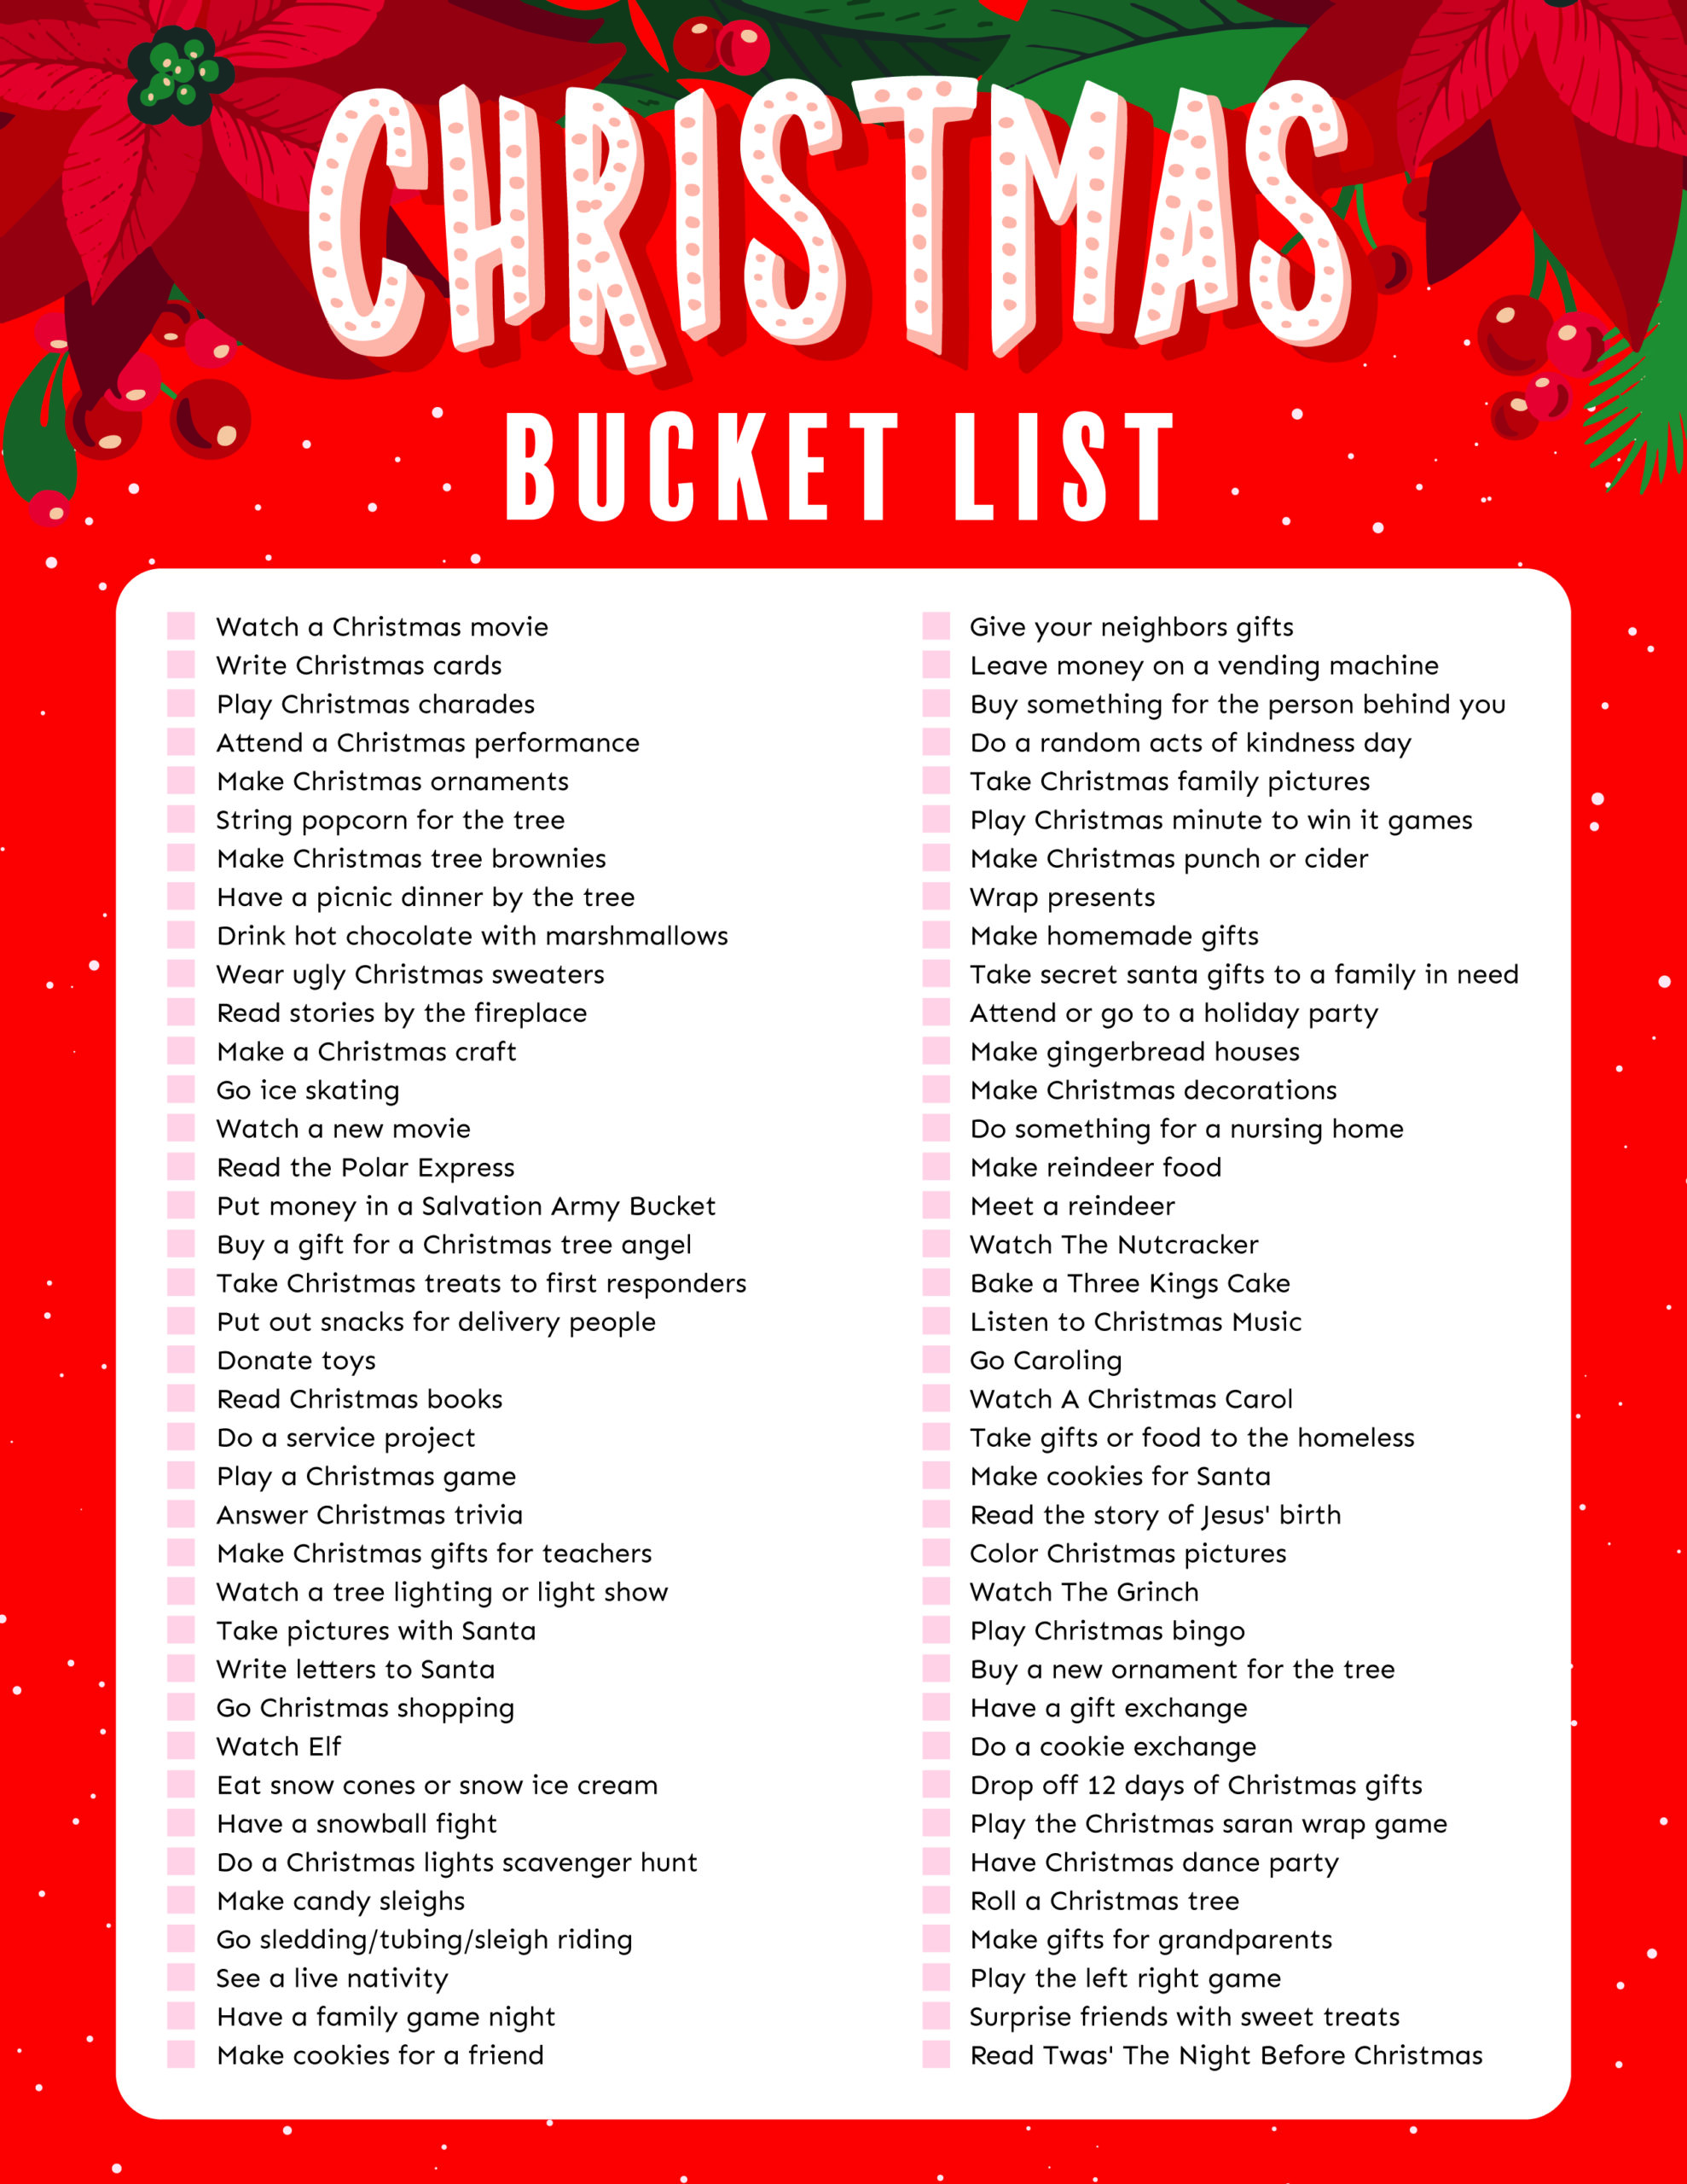 Christmas bucket list with 75 items